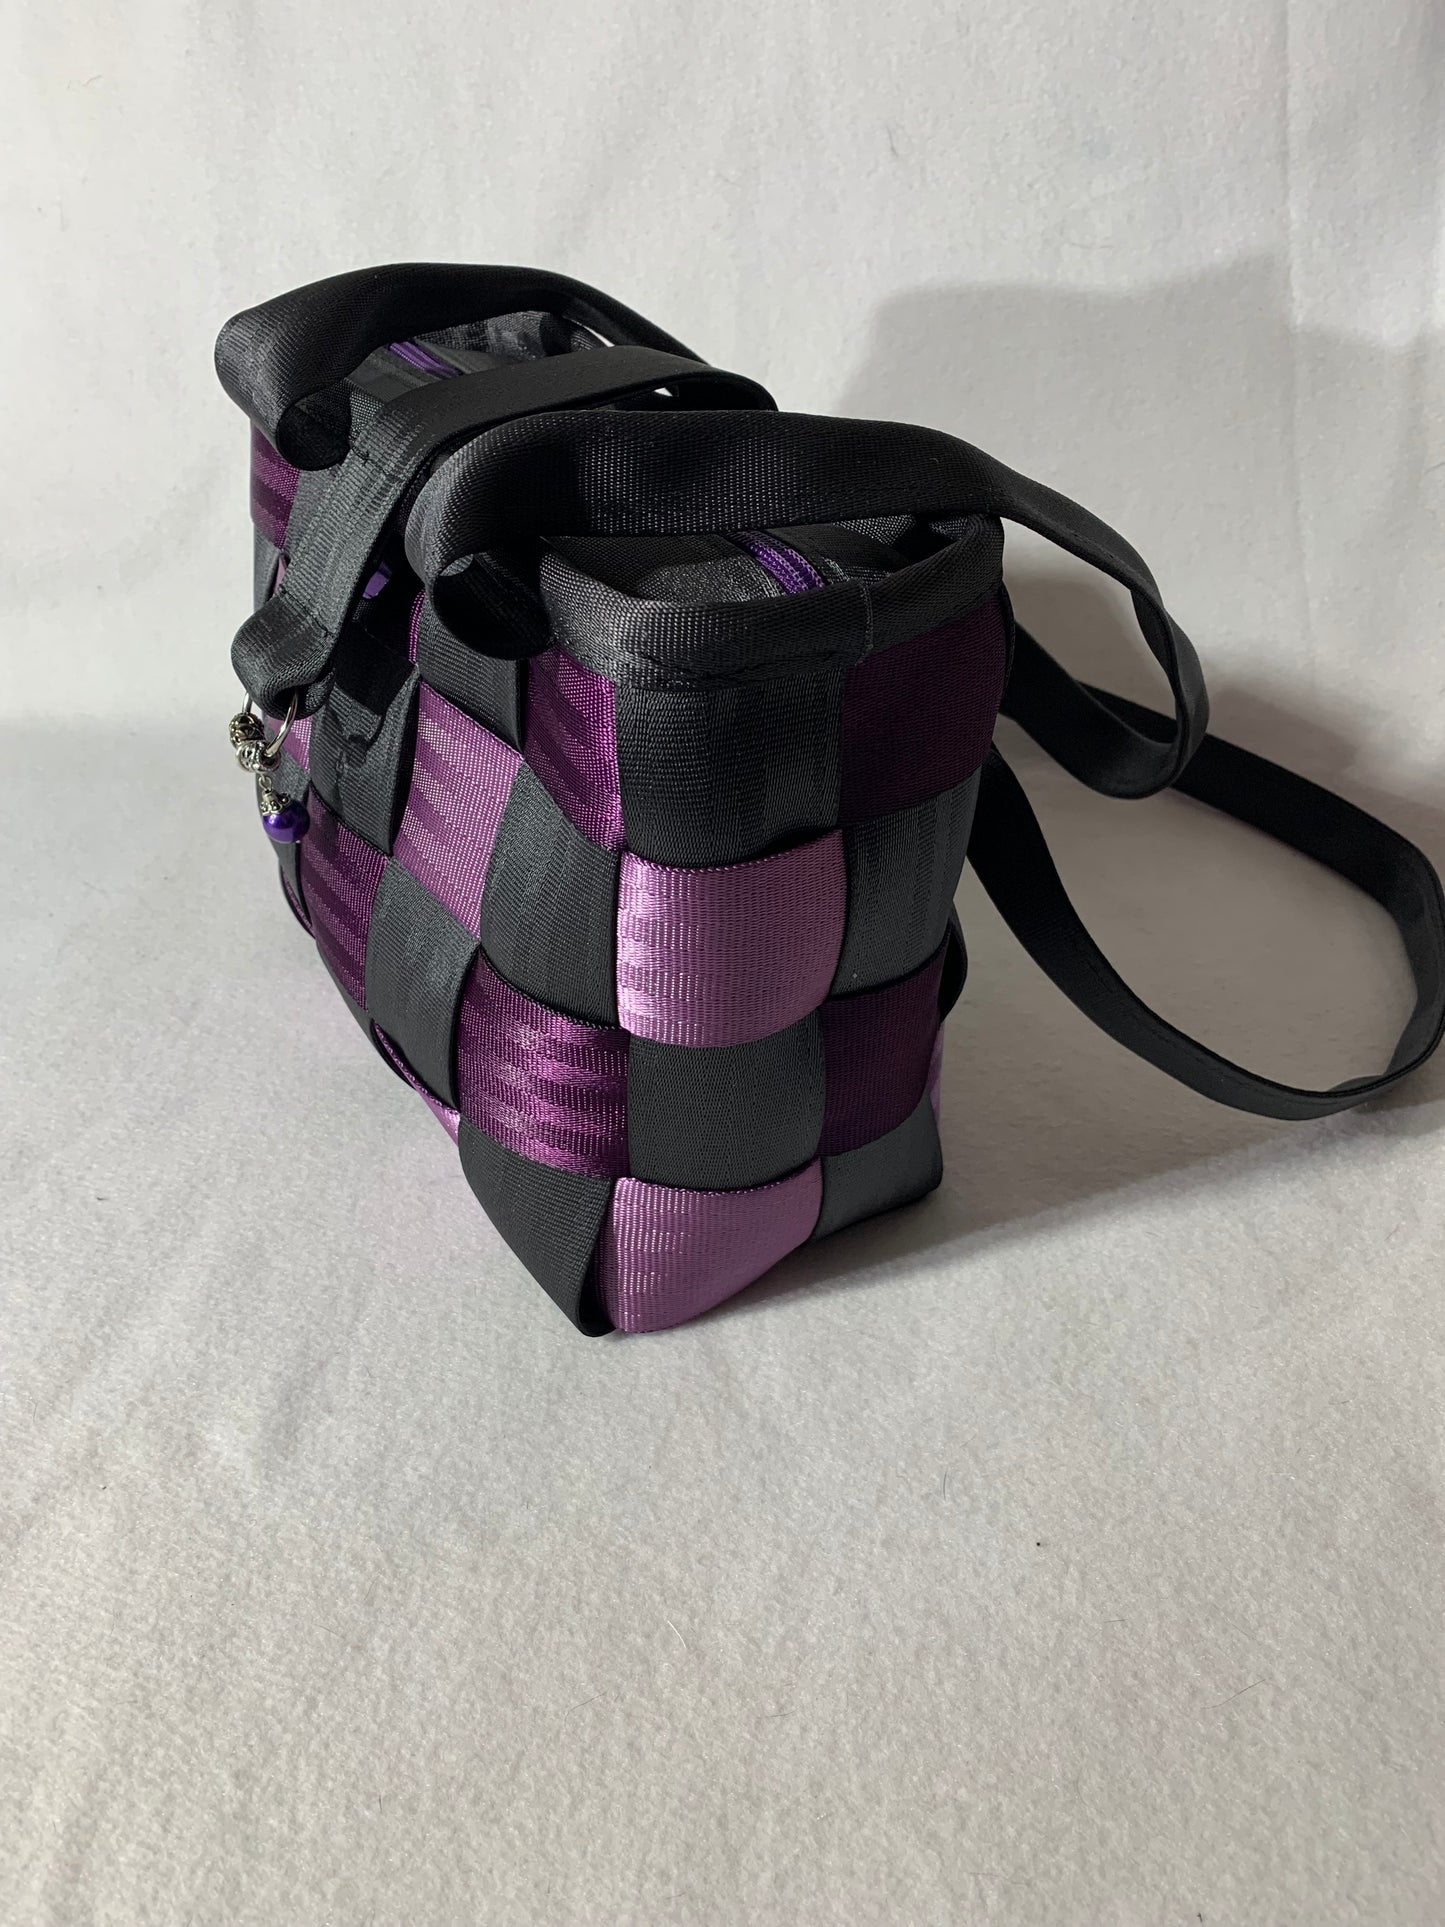 Custom seat belt purse, weave or panel style in various colors, seatbelt handbag, washable